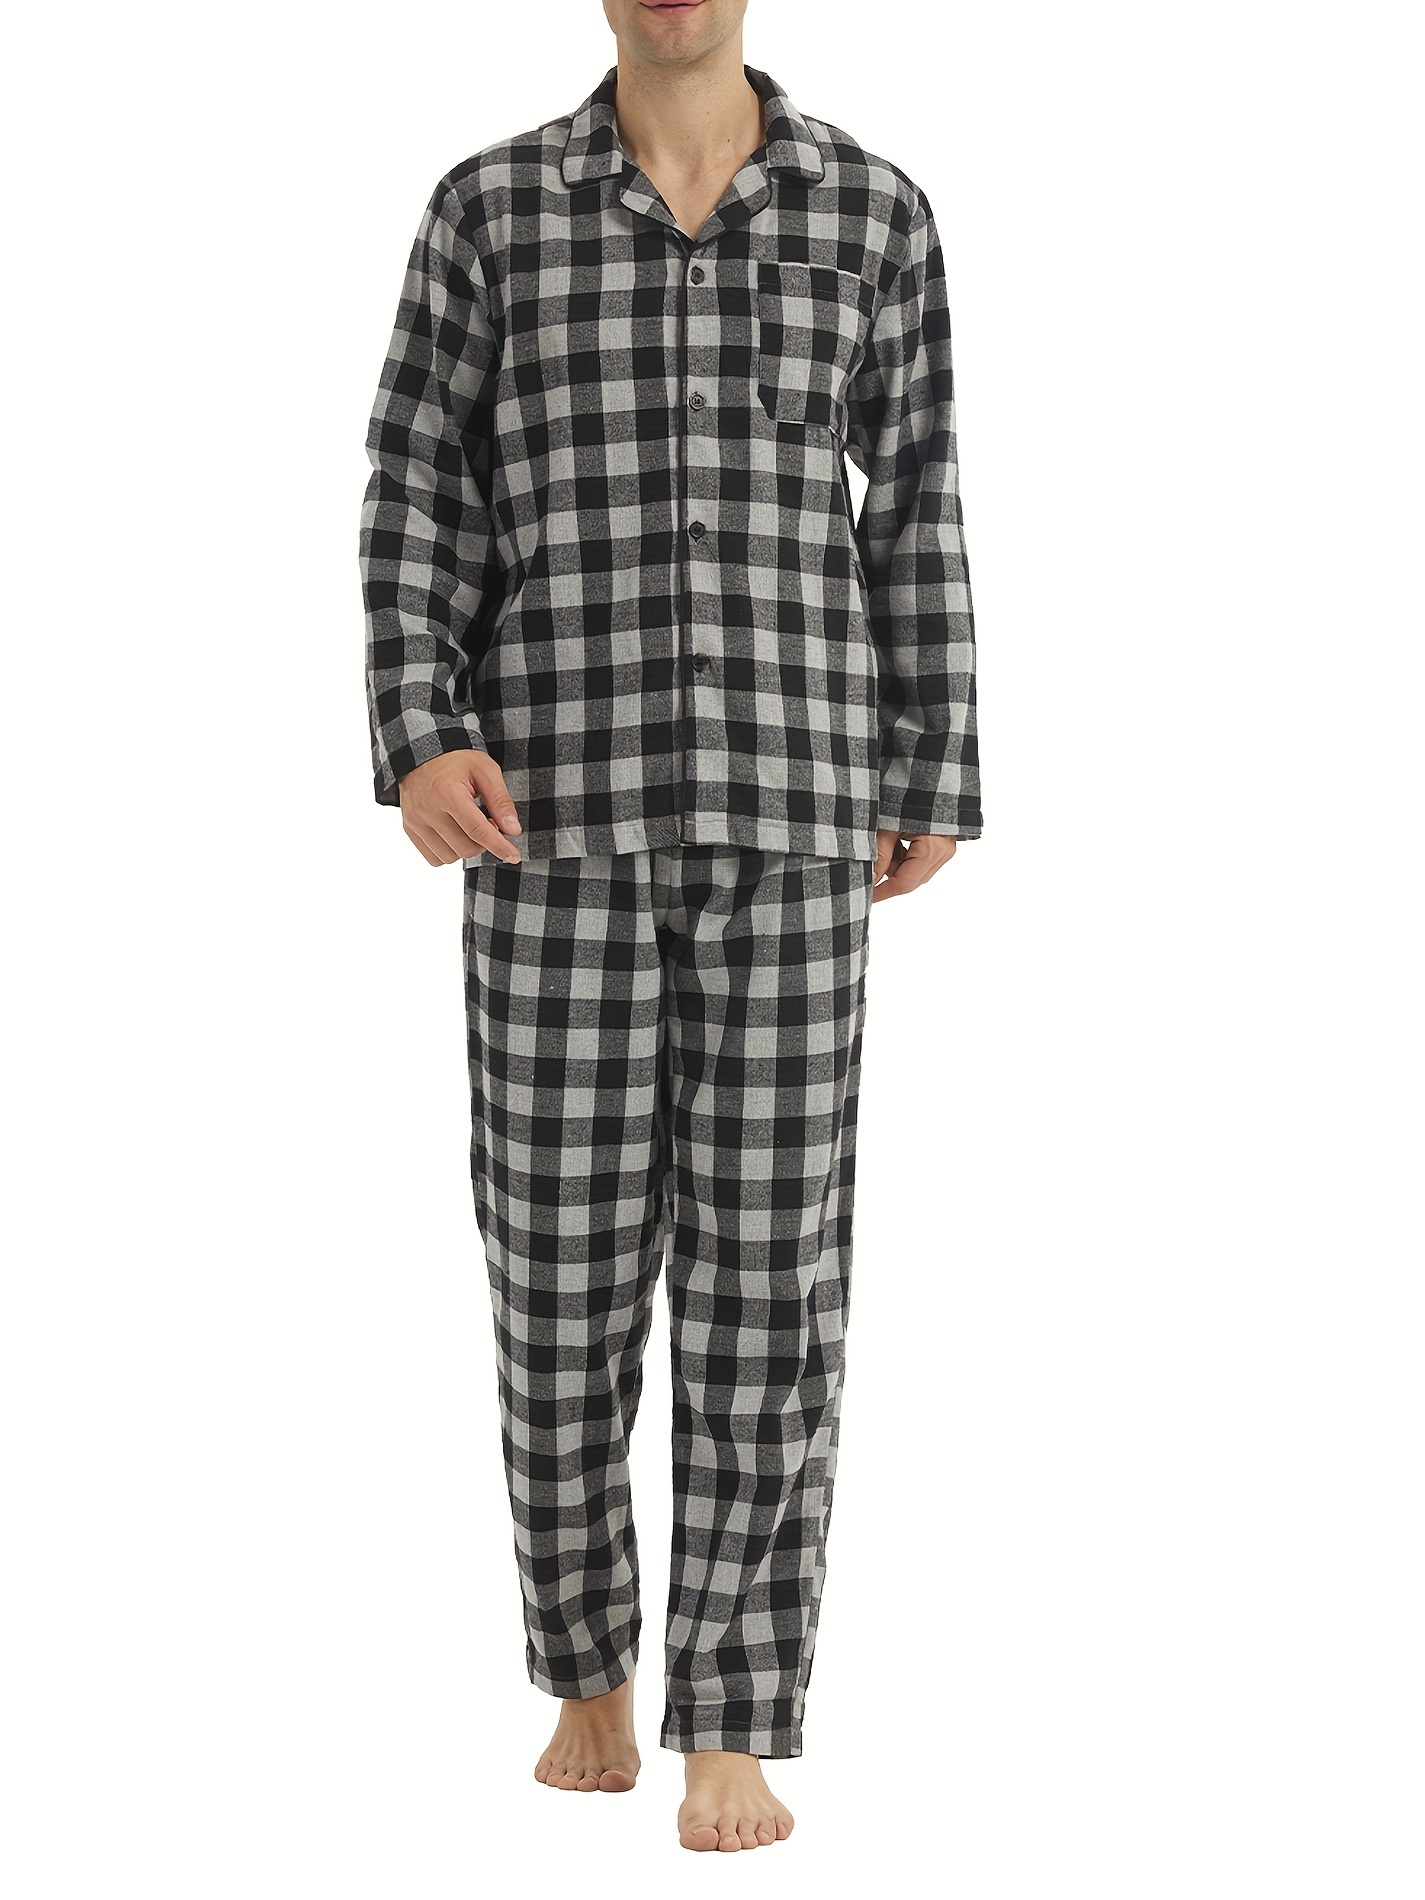 LANBAOSI Women Flannel Pajamas Sets 2 Piece Long Sleeve Top and